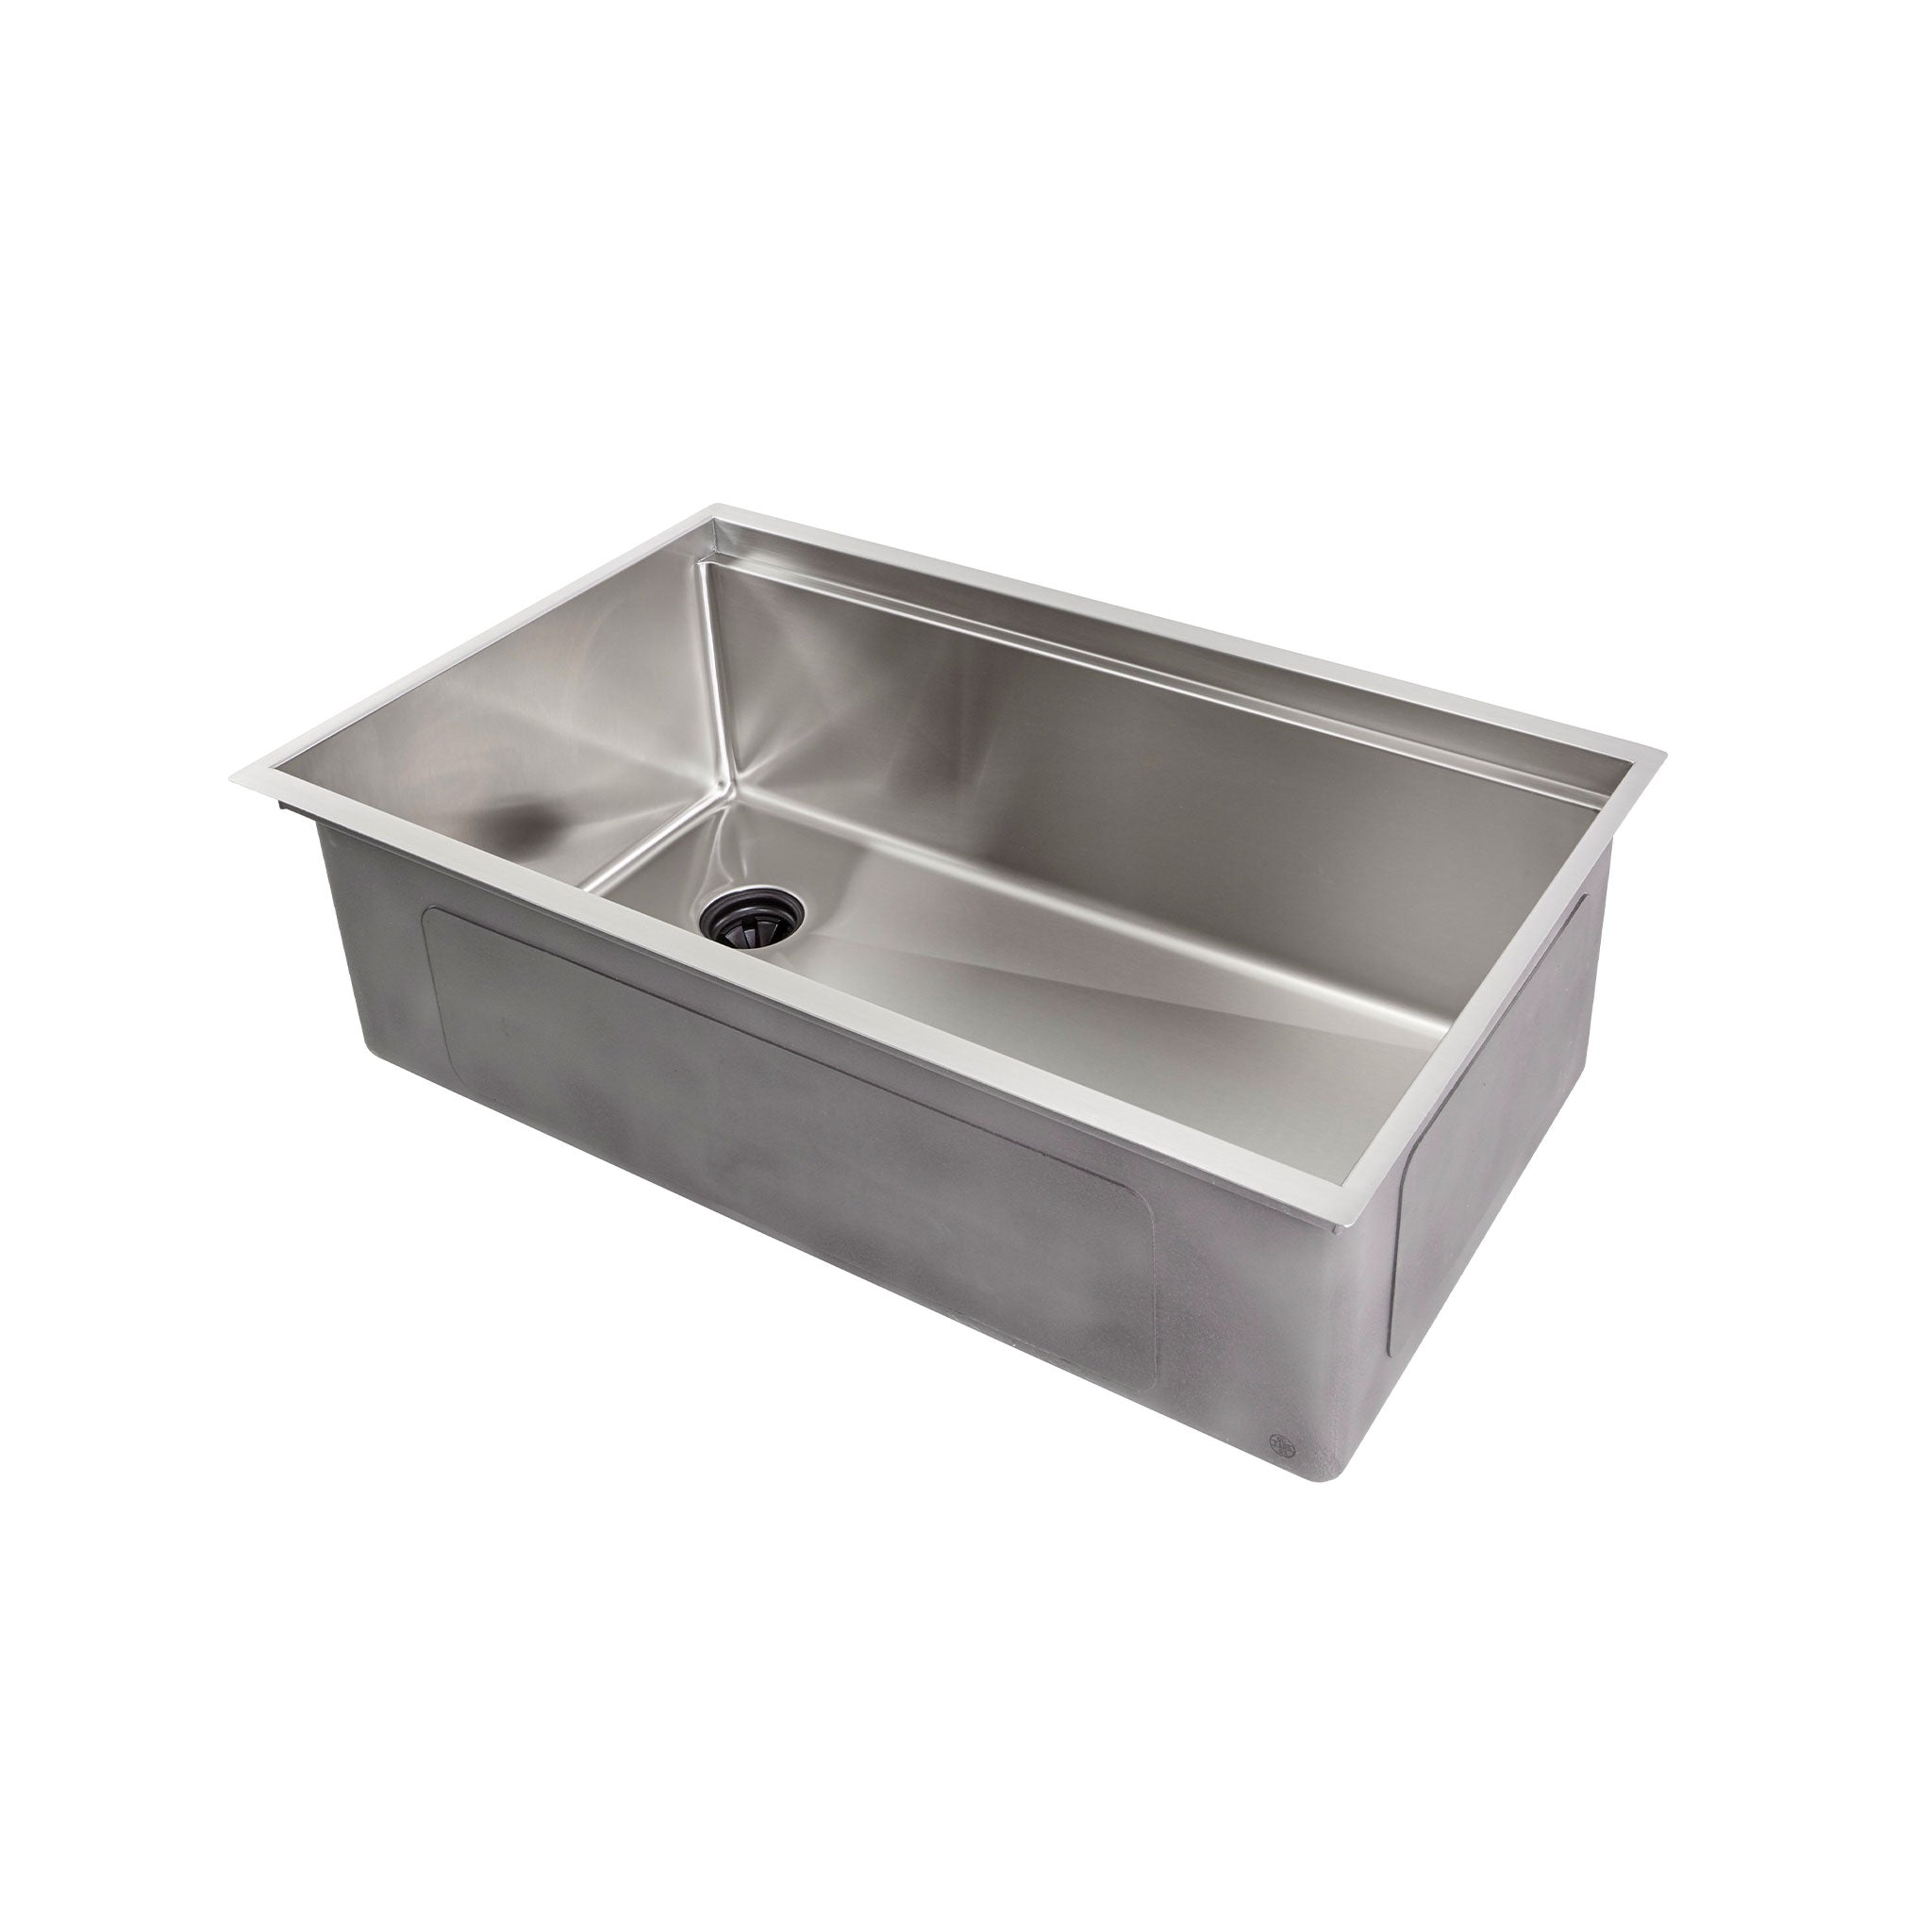 31 inch stainless steel undermount workstation sink. Single basin kitchen sink with offset left drain 